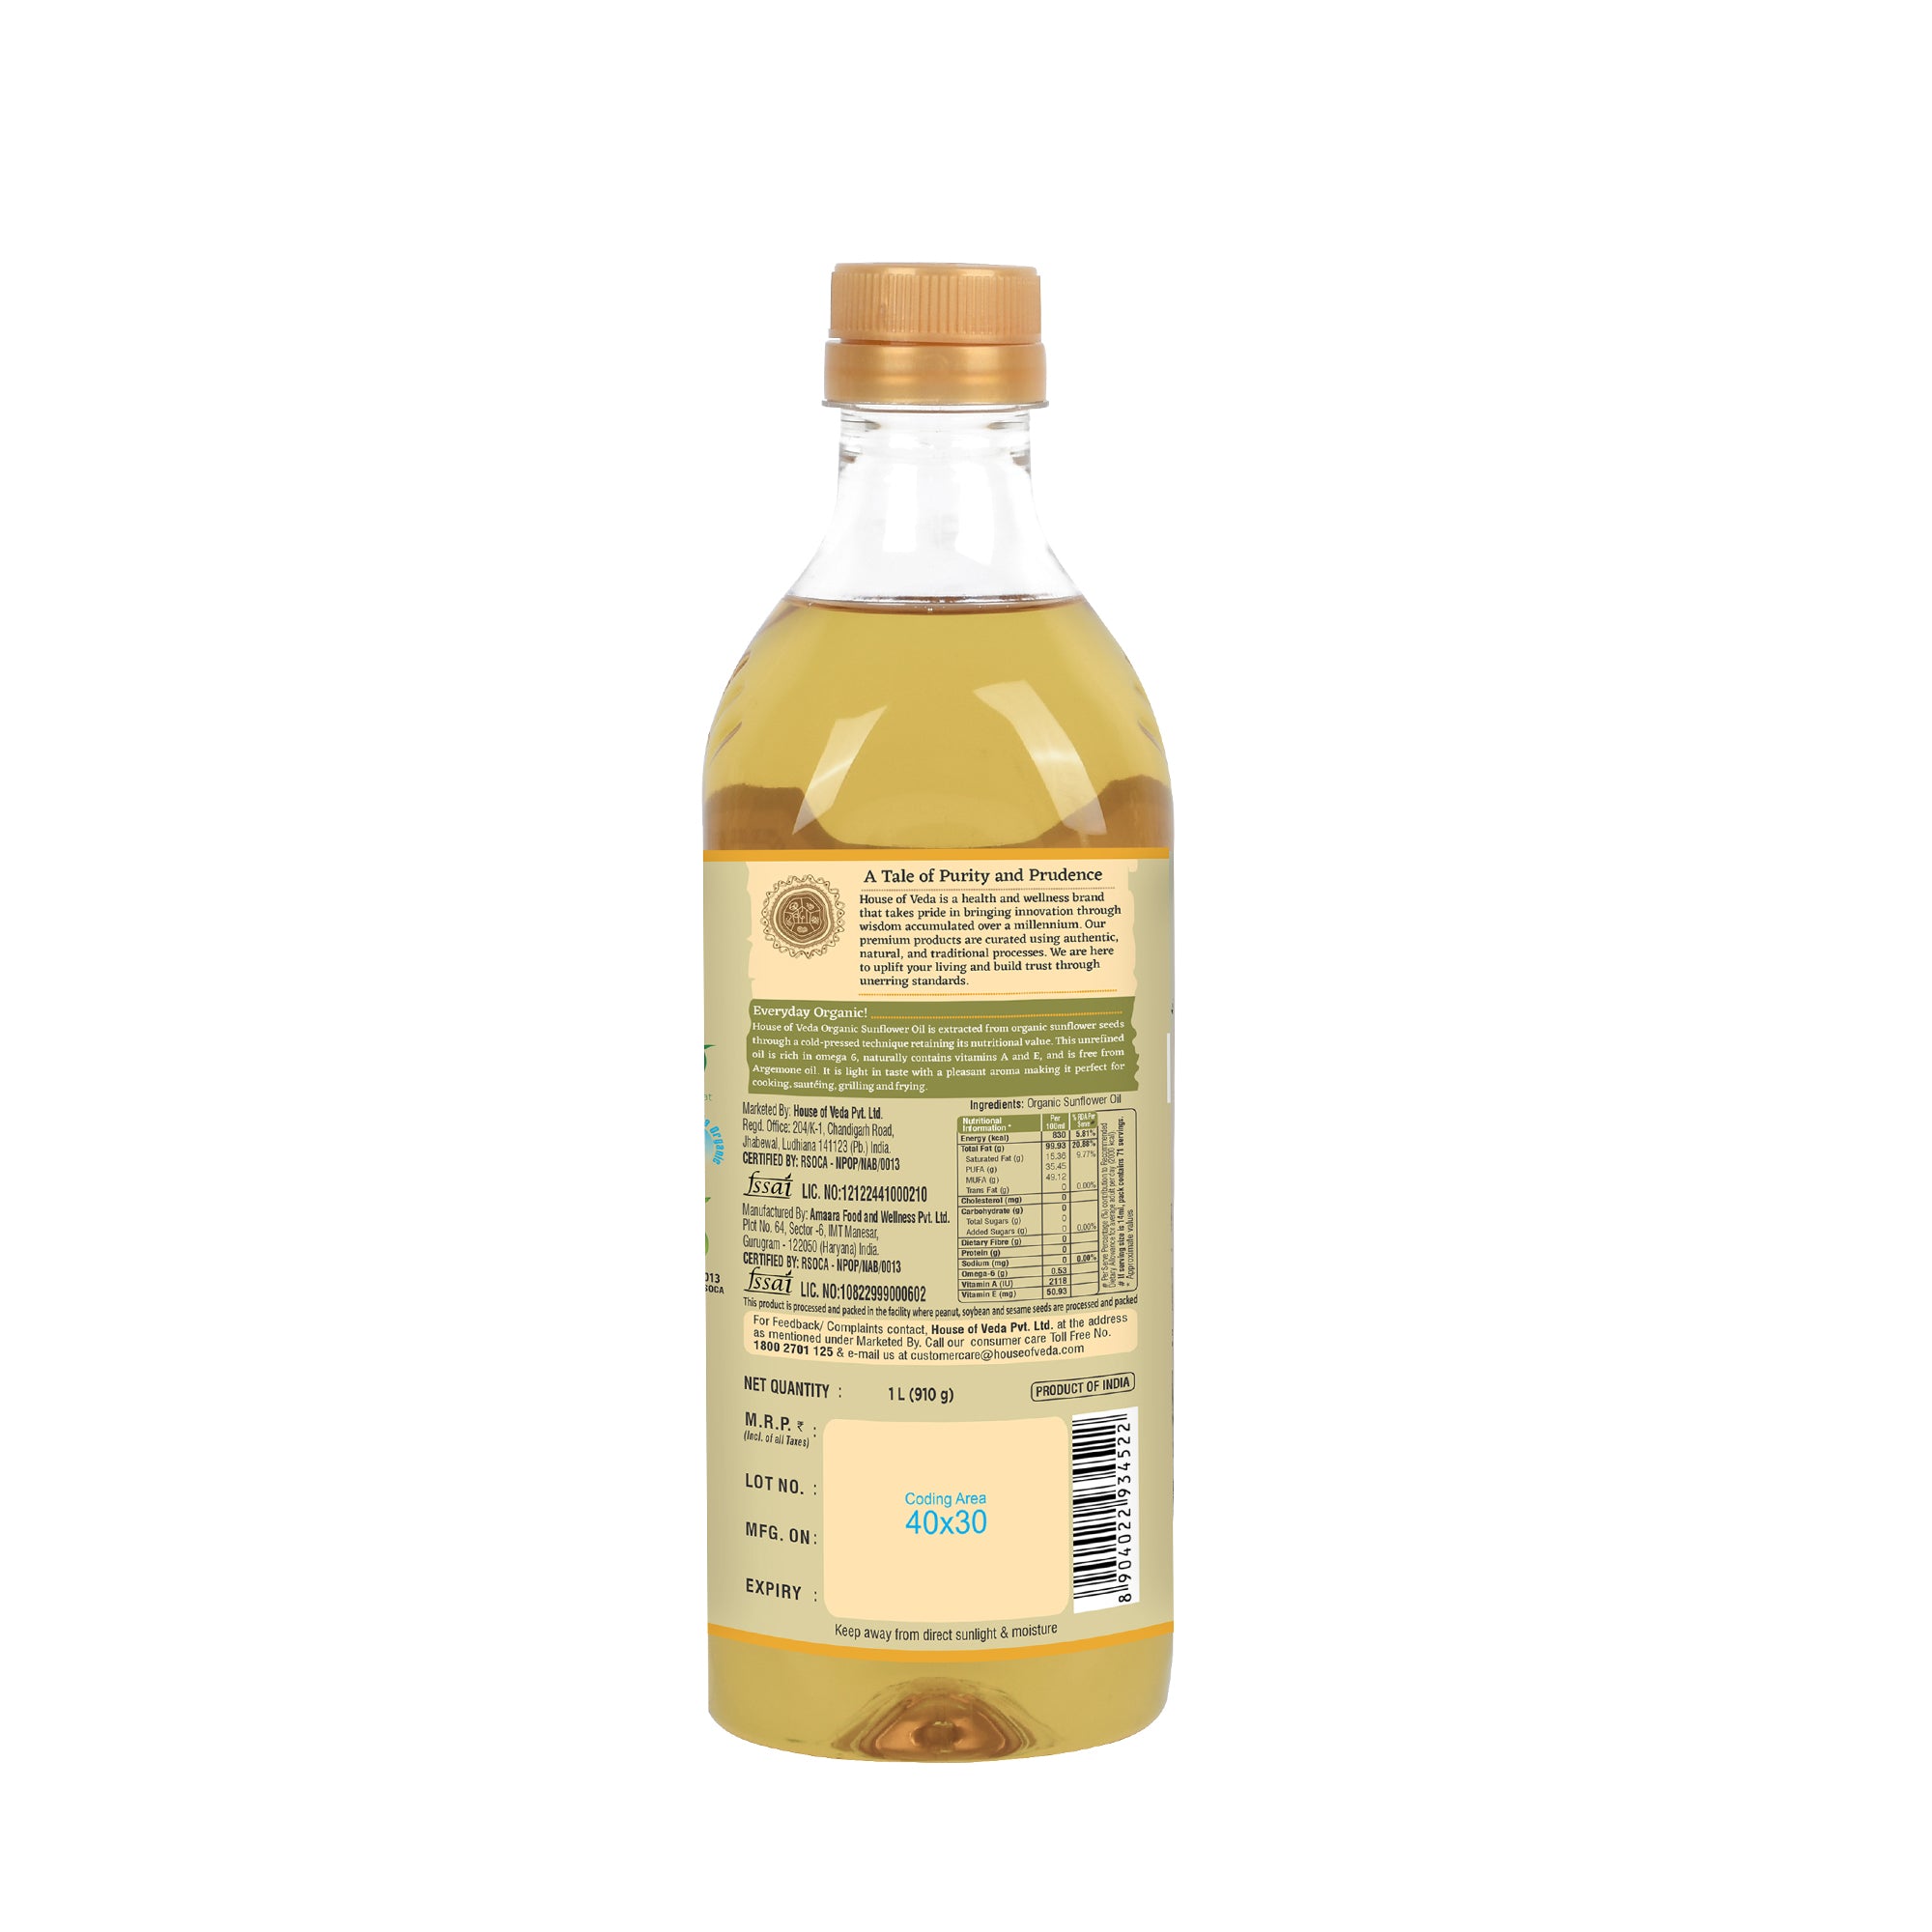 Organic Sunflower Oil 1L